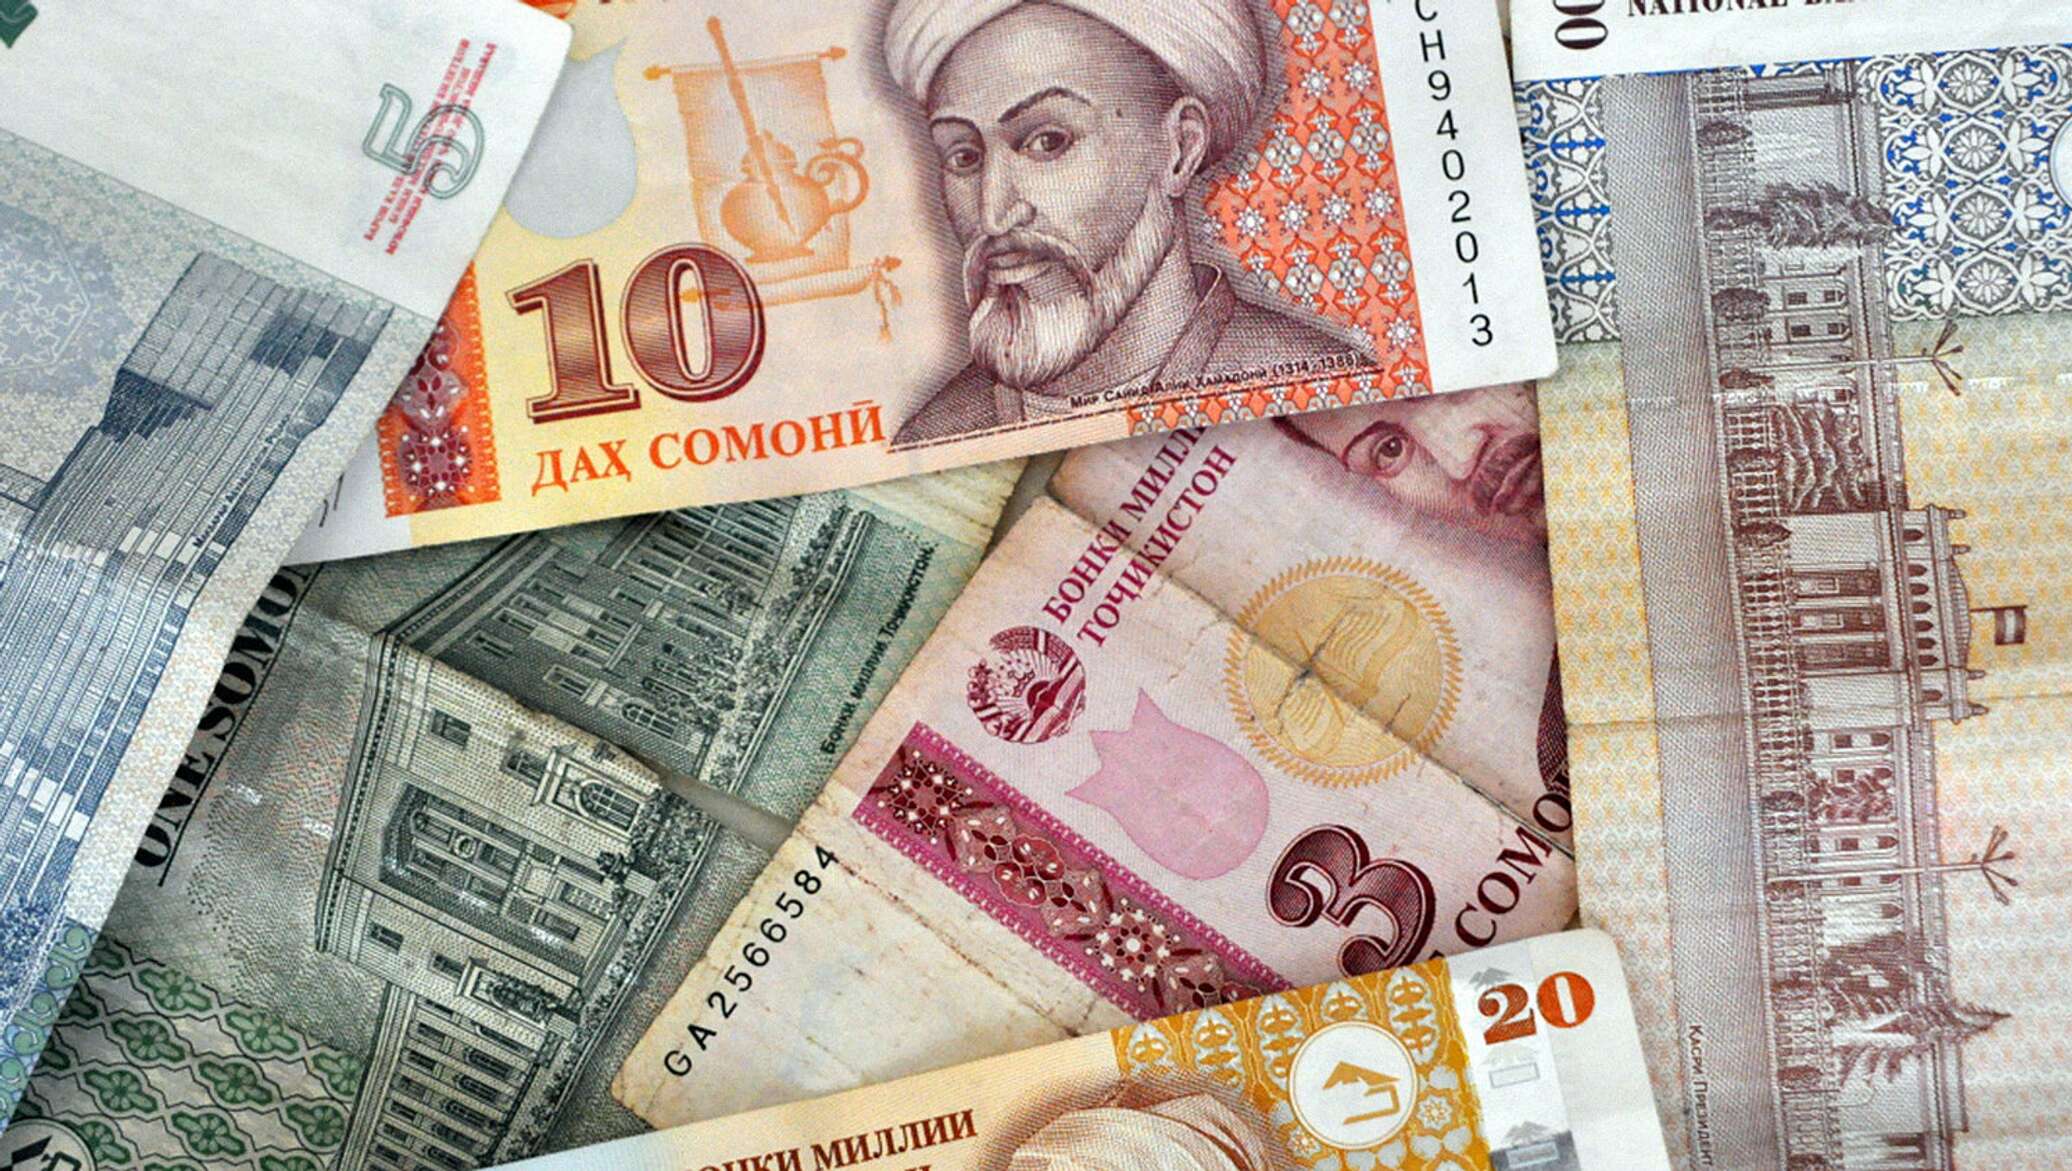 Сум таджикистан. Деньги Сомони. Деньги Таджикистана. Купюра Сомони. Национальная валюта Таджикистана.